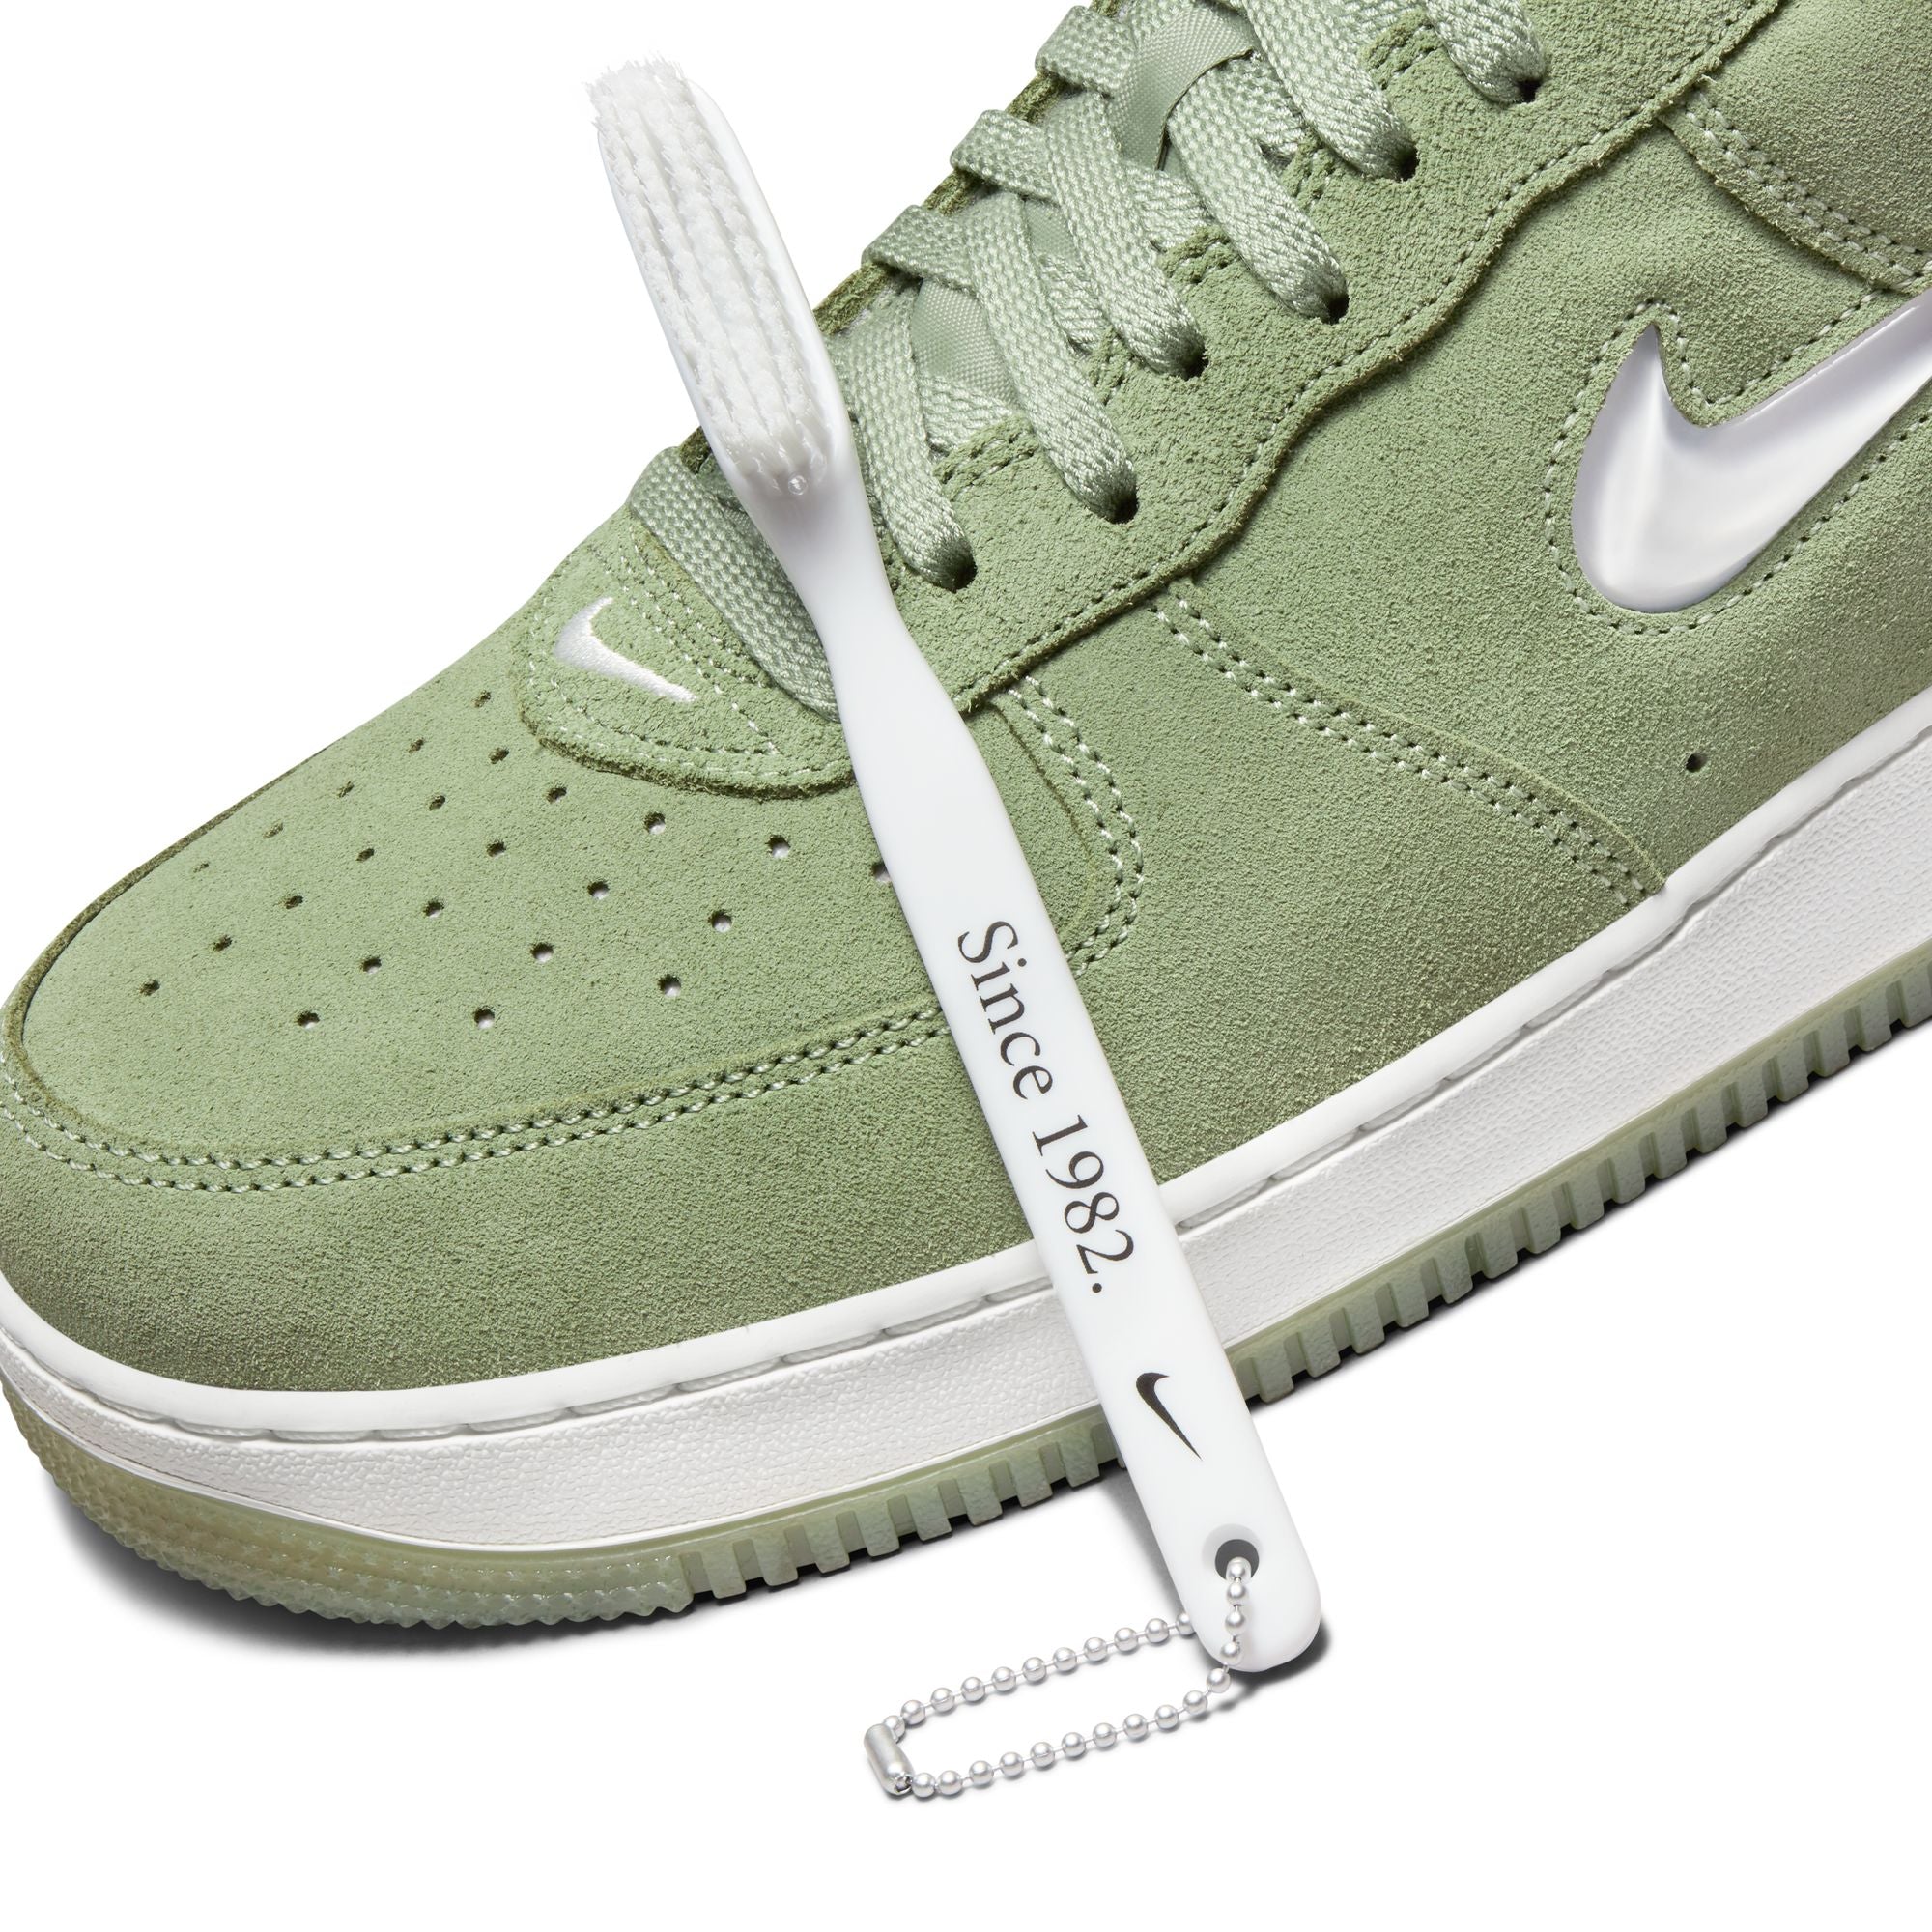 Nike Air Force 1 Low Retro Men's Shoes